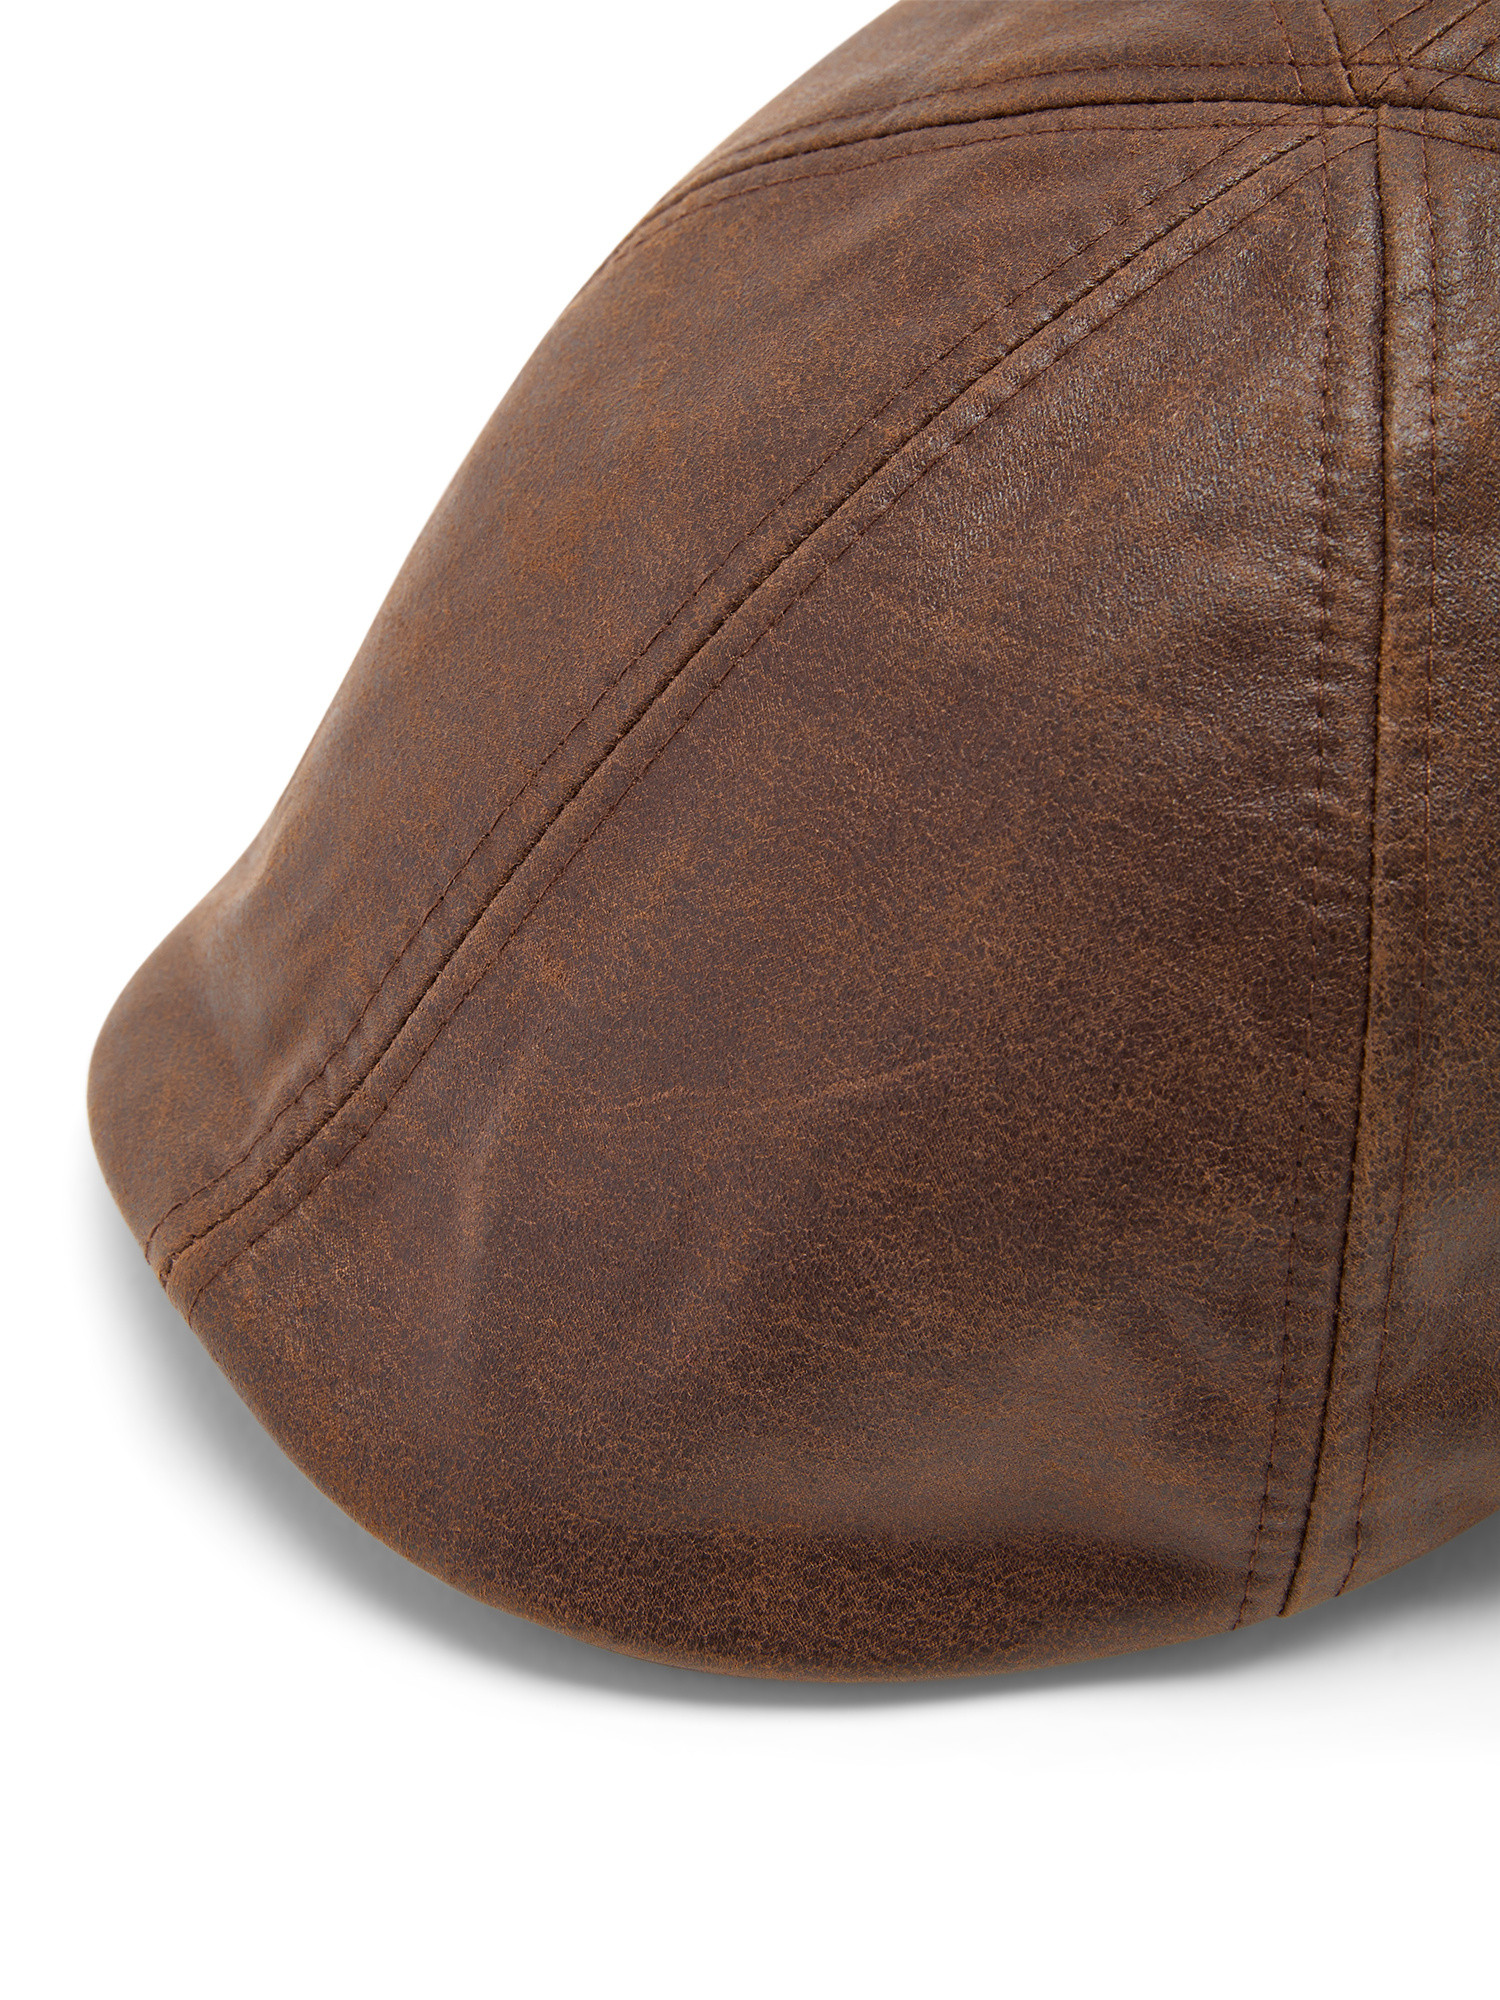 Luca D'Altieri - Synthetic cap, Dark Brown, large image number 1